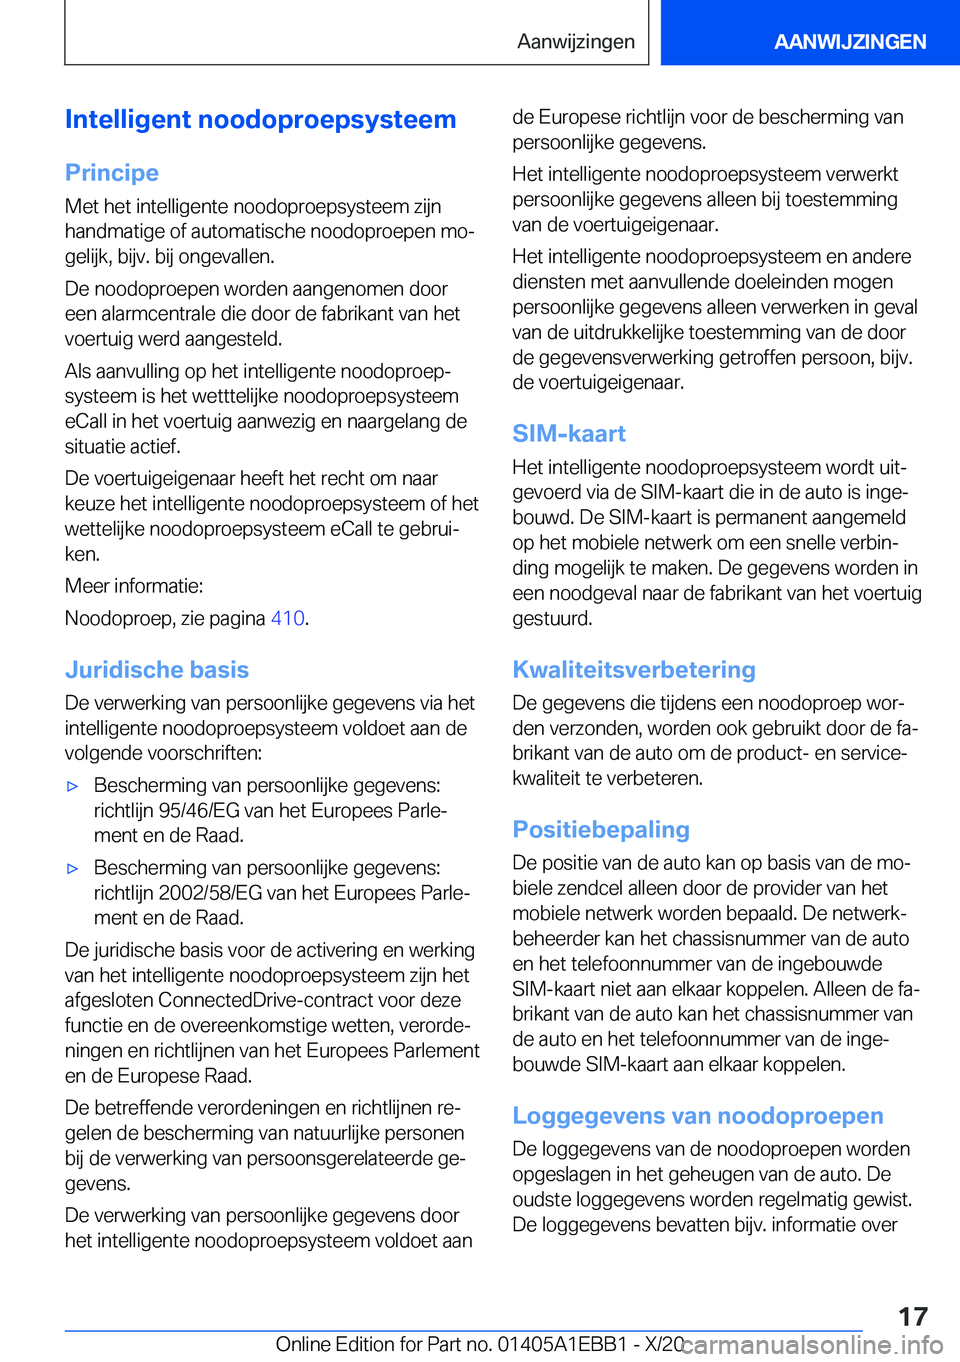 BMW 3 SERIES 2021  Instructieboekjes (in Dutch) �I�n�t�e�l�l�i�g�e�n�t��n�o�o�d�o�p�r�o�e�p�s�y�s�t�e�e�m
�P�r�i�n�c�i�p�e �M�e�t��h�e�t��i�n�t�e�l�l�i�g�e�n�t�e��n�o�o�d�o�p�r�o�e�p�s�y�s�t�e�e�m��z�i�j�n�h�a�n�d�m�a�t�i�g�e��o�f��a�u�t�o�m